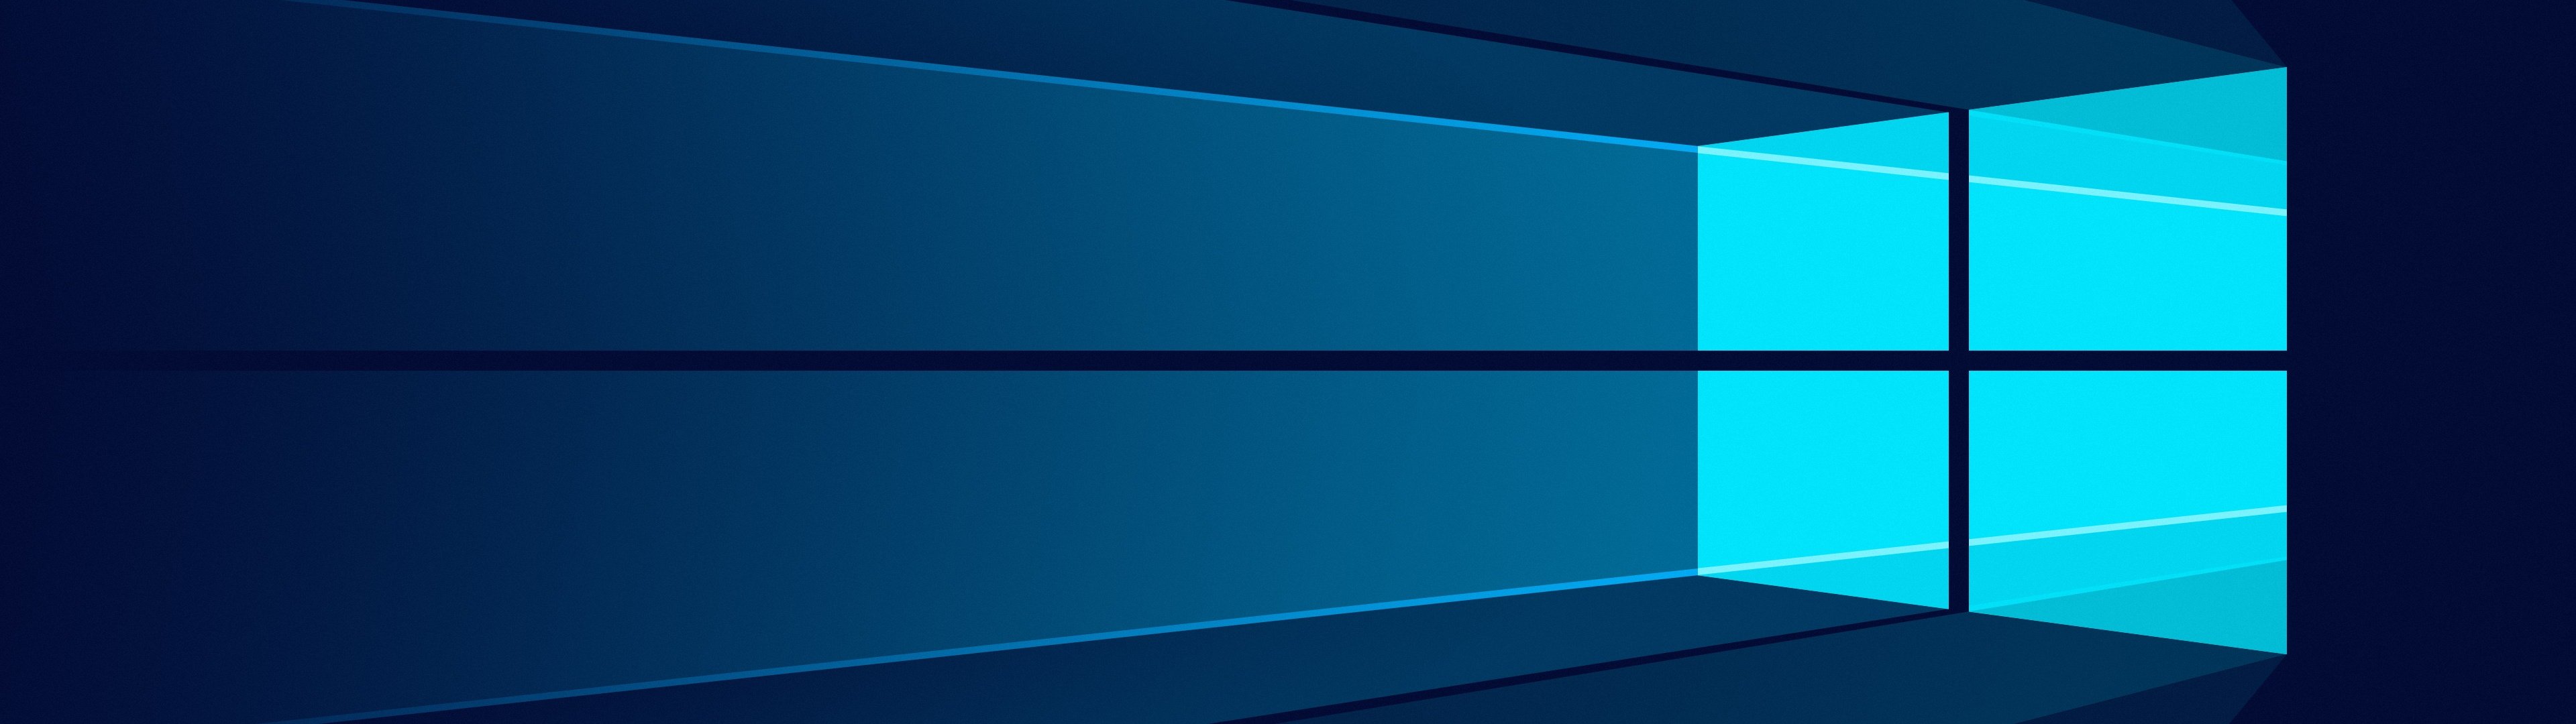 Windows 10 Wallpapers 4K, Microsoft Windows, Minimalist, Blue background, Technology,